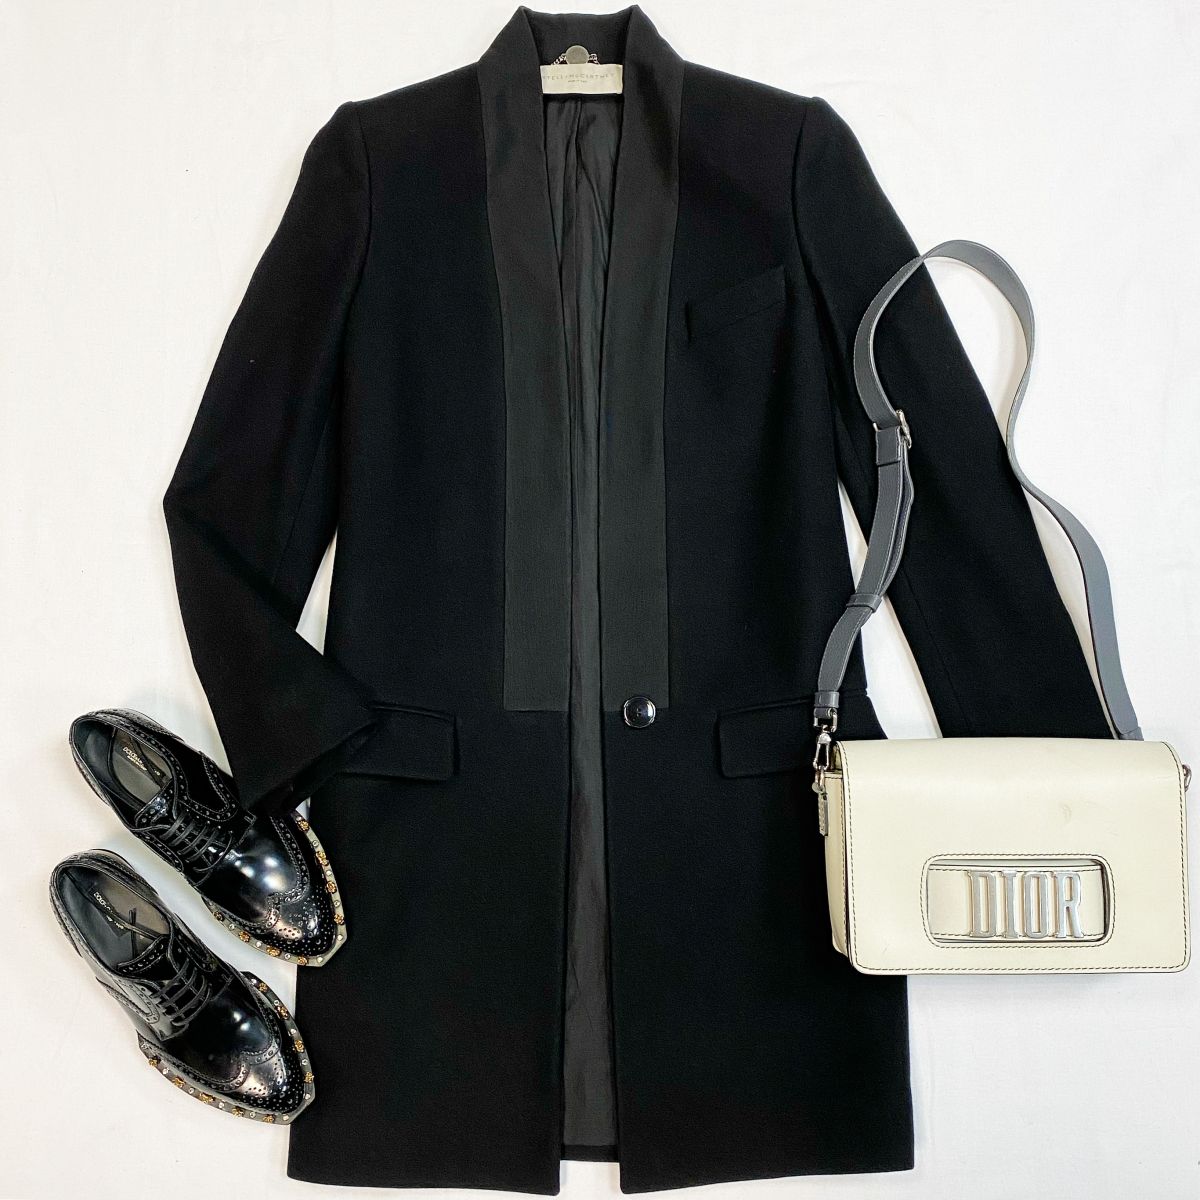 Пальто Stella McCartney размер 38 цена 10 770 руб Ботинки Dolce Gabbana размер 36.5 цена 15 385 руб Сумка Christian Dior